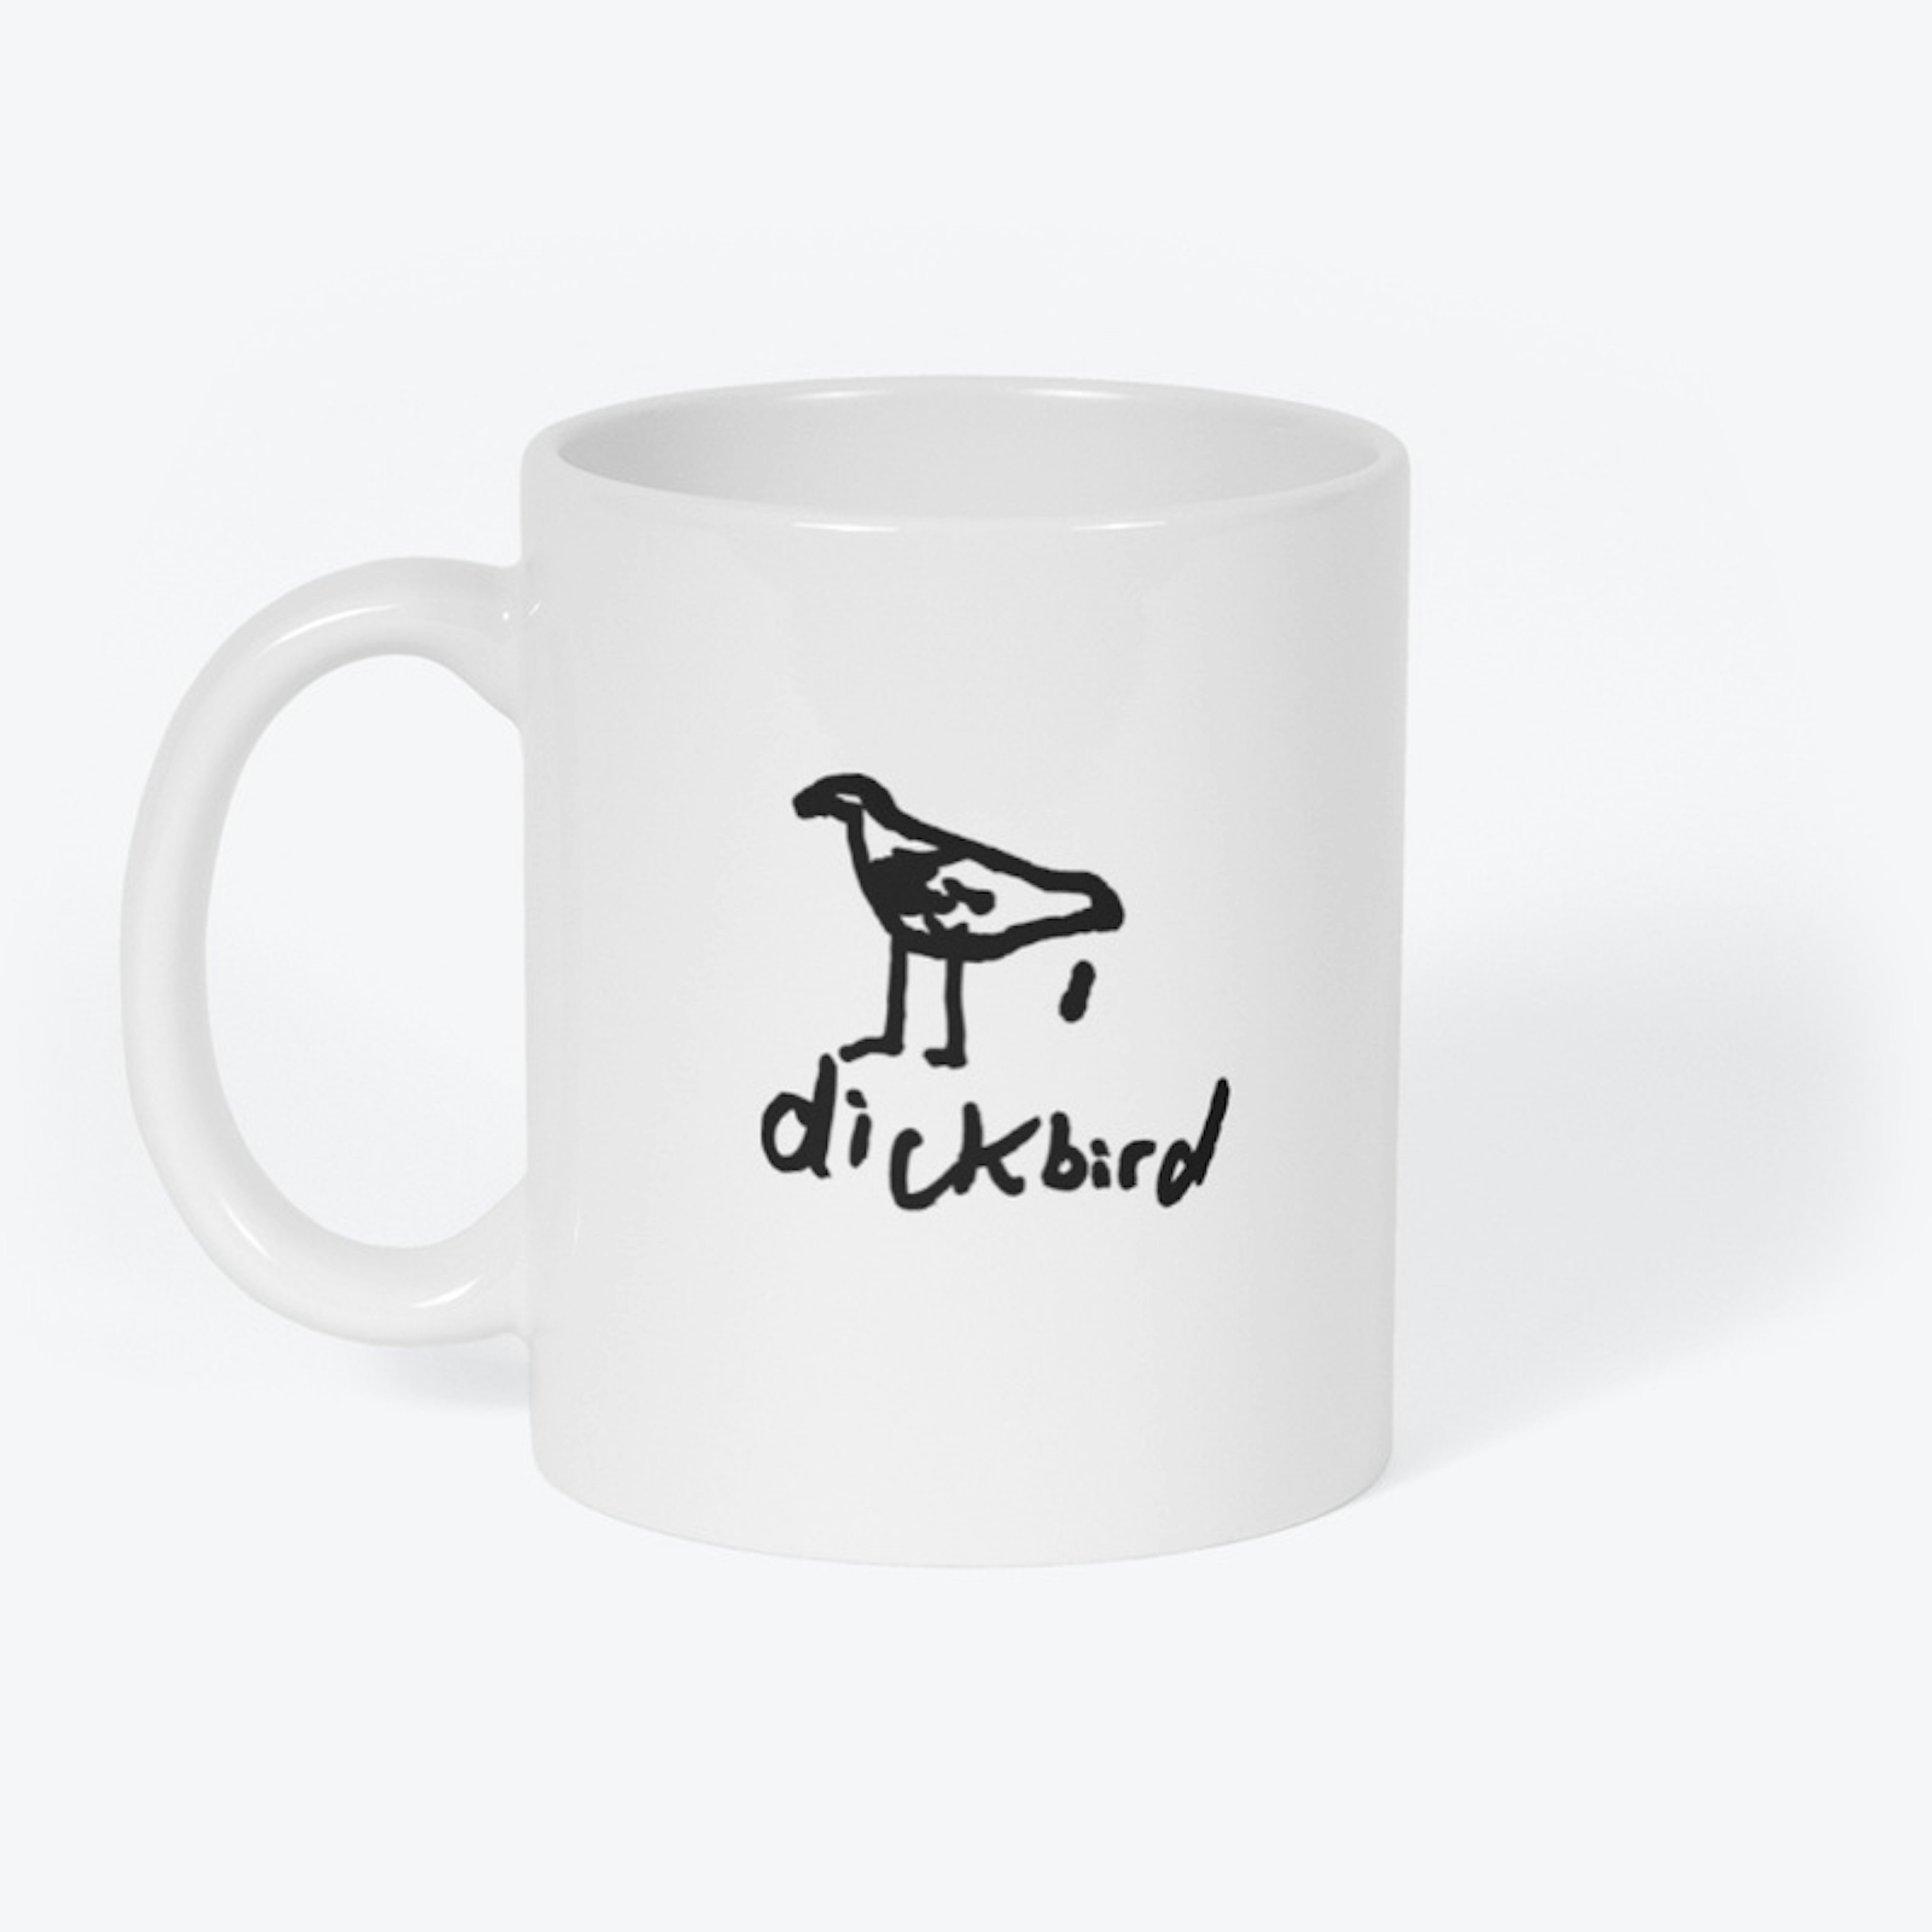 Dickbird Mug